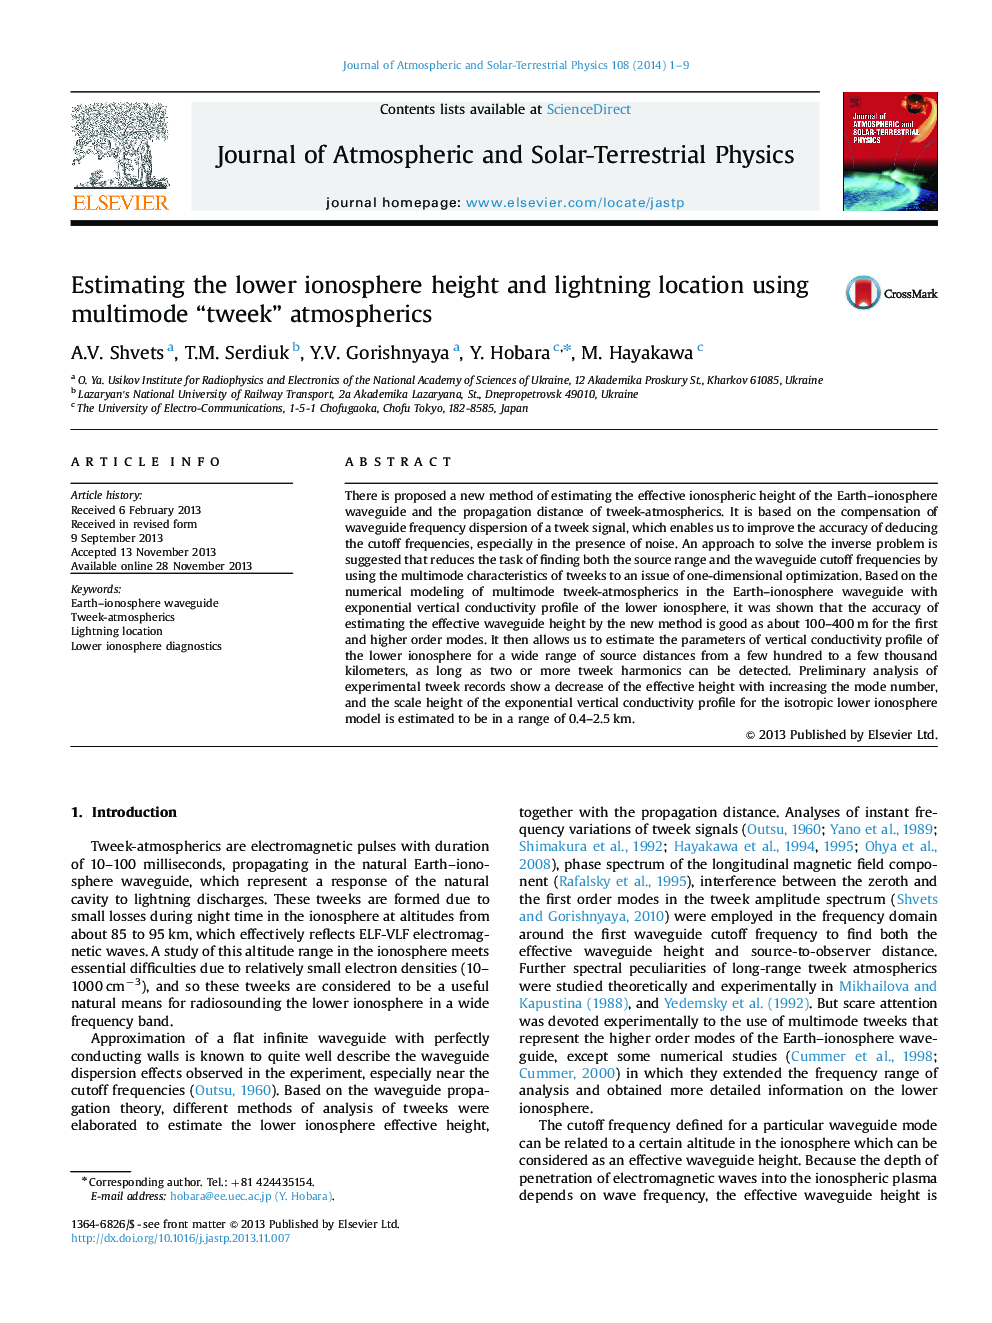 Estimating the lower ionosphere height and lightning location using multimode “tweek” atmospherics